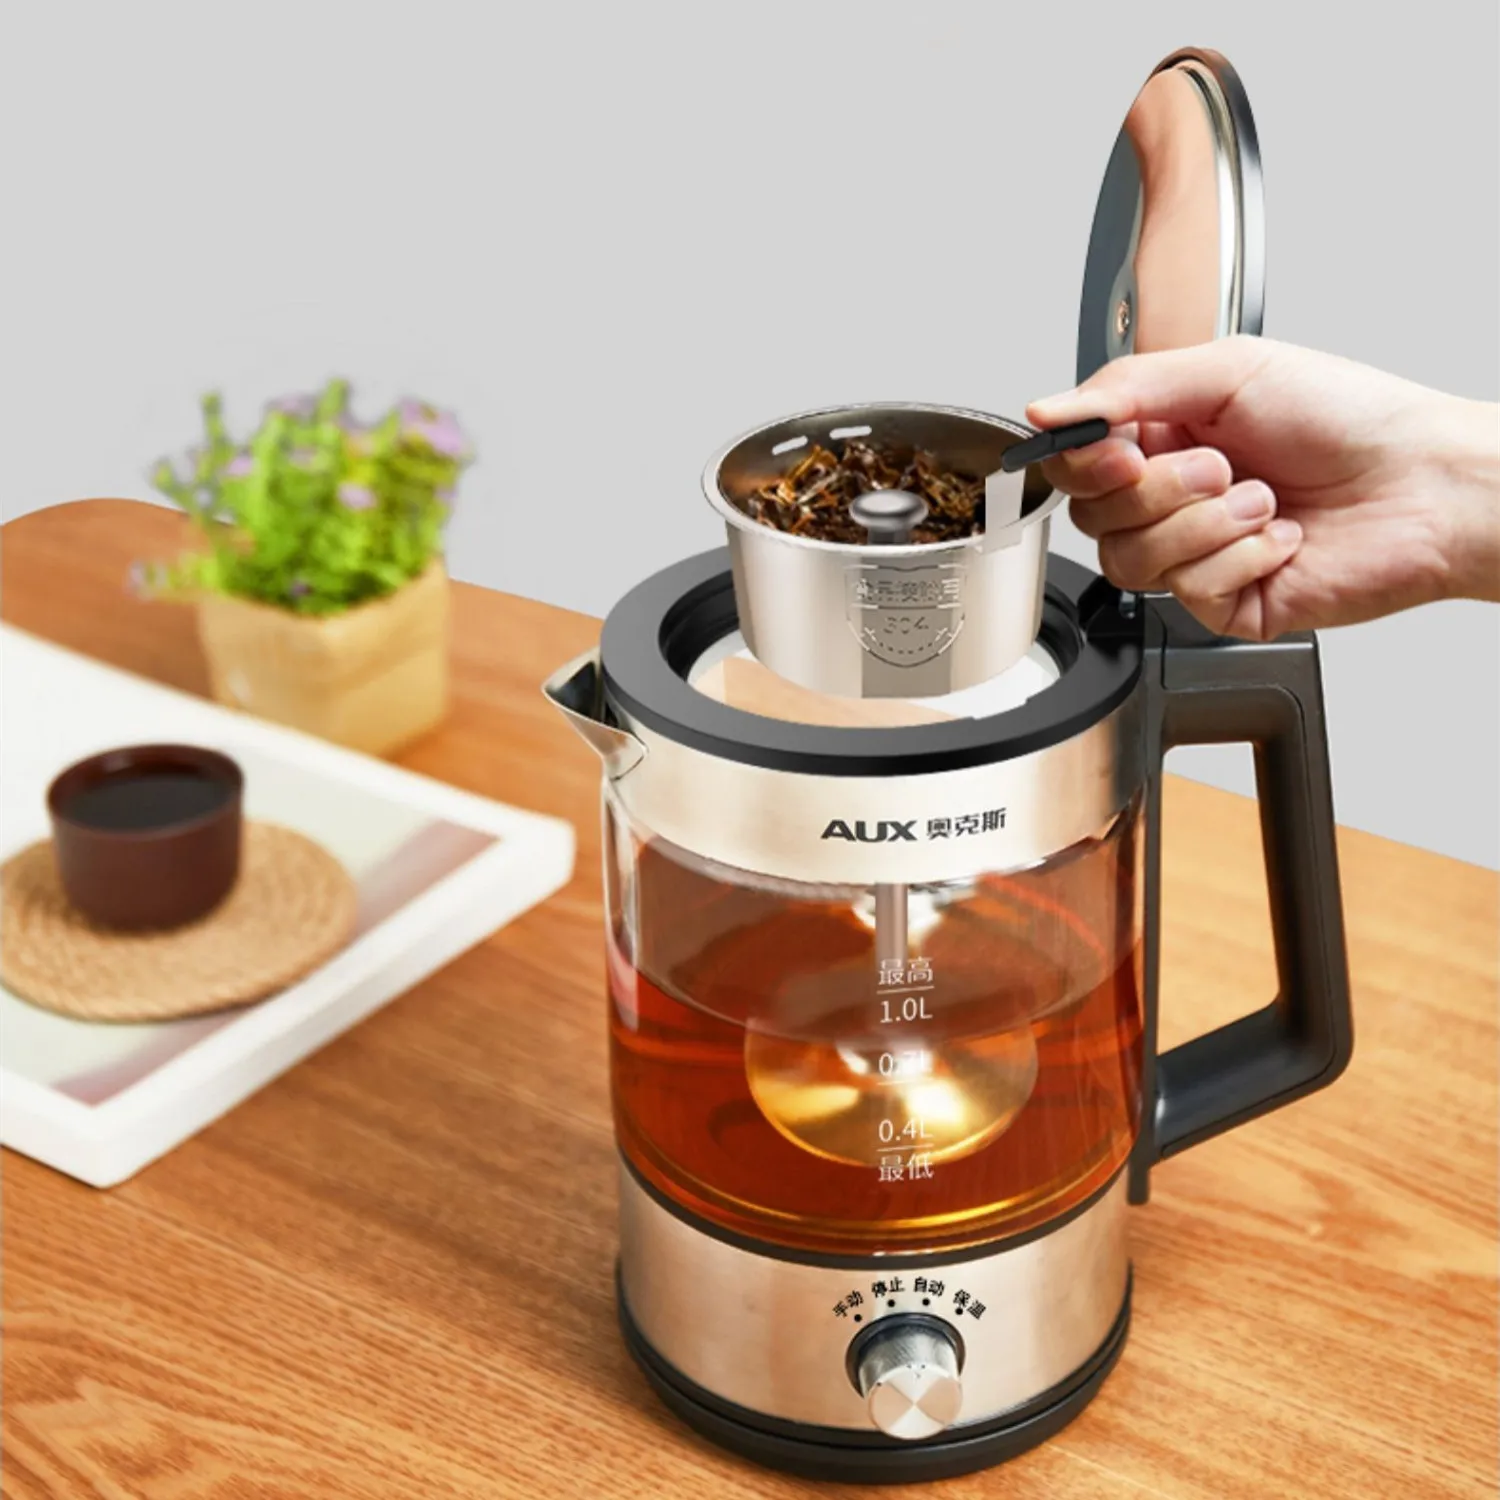 https://ae01.alicdn.com/kf/S09f57cc7f4a148559962ebf994f45441A/1L-Electric-Tea-Cooking-Pot-Machine-Tea-Cooker-Automatic-Tea-Steaming-Cooking-Kettle-Water-Boiling-Pot.jpg